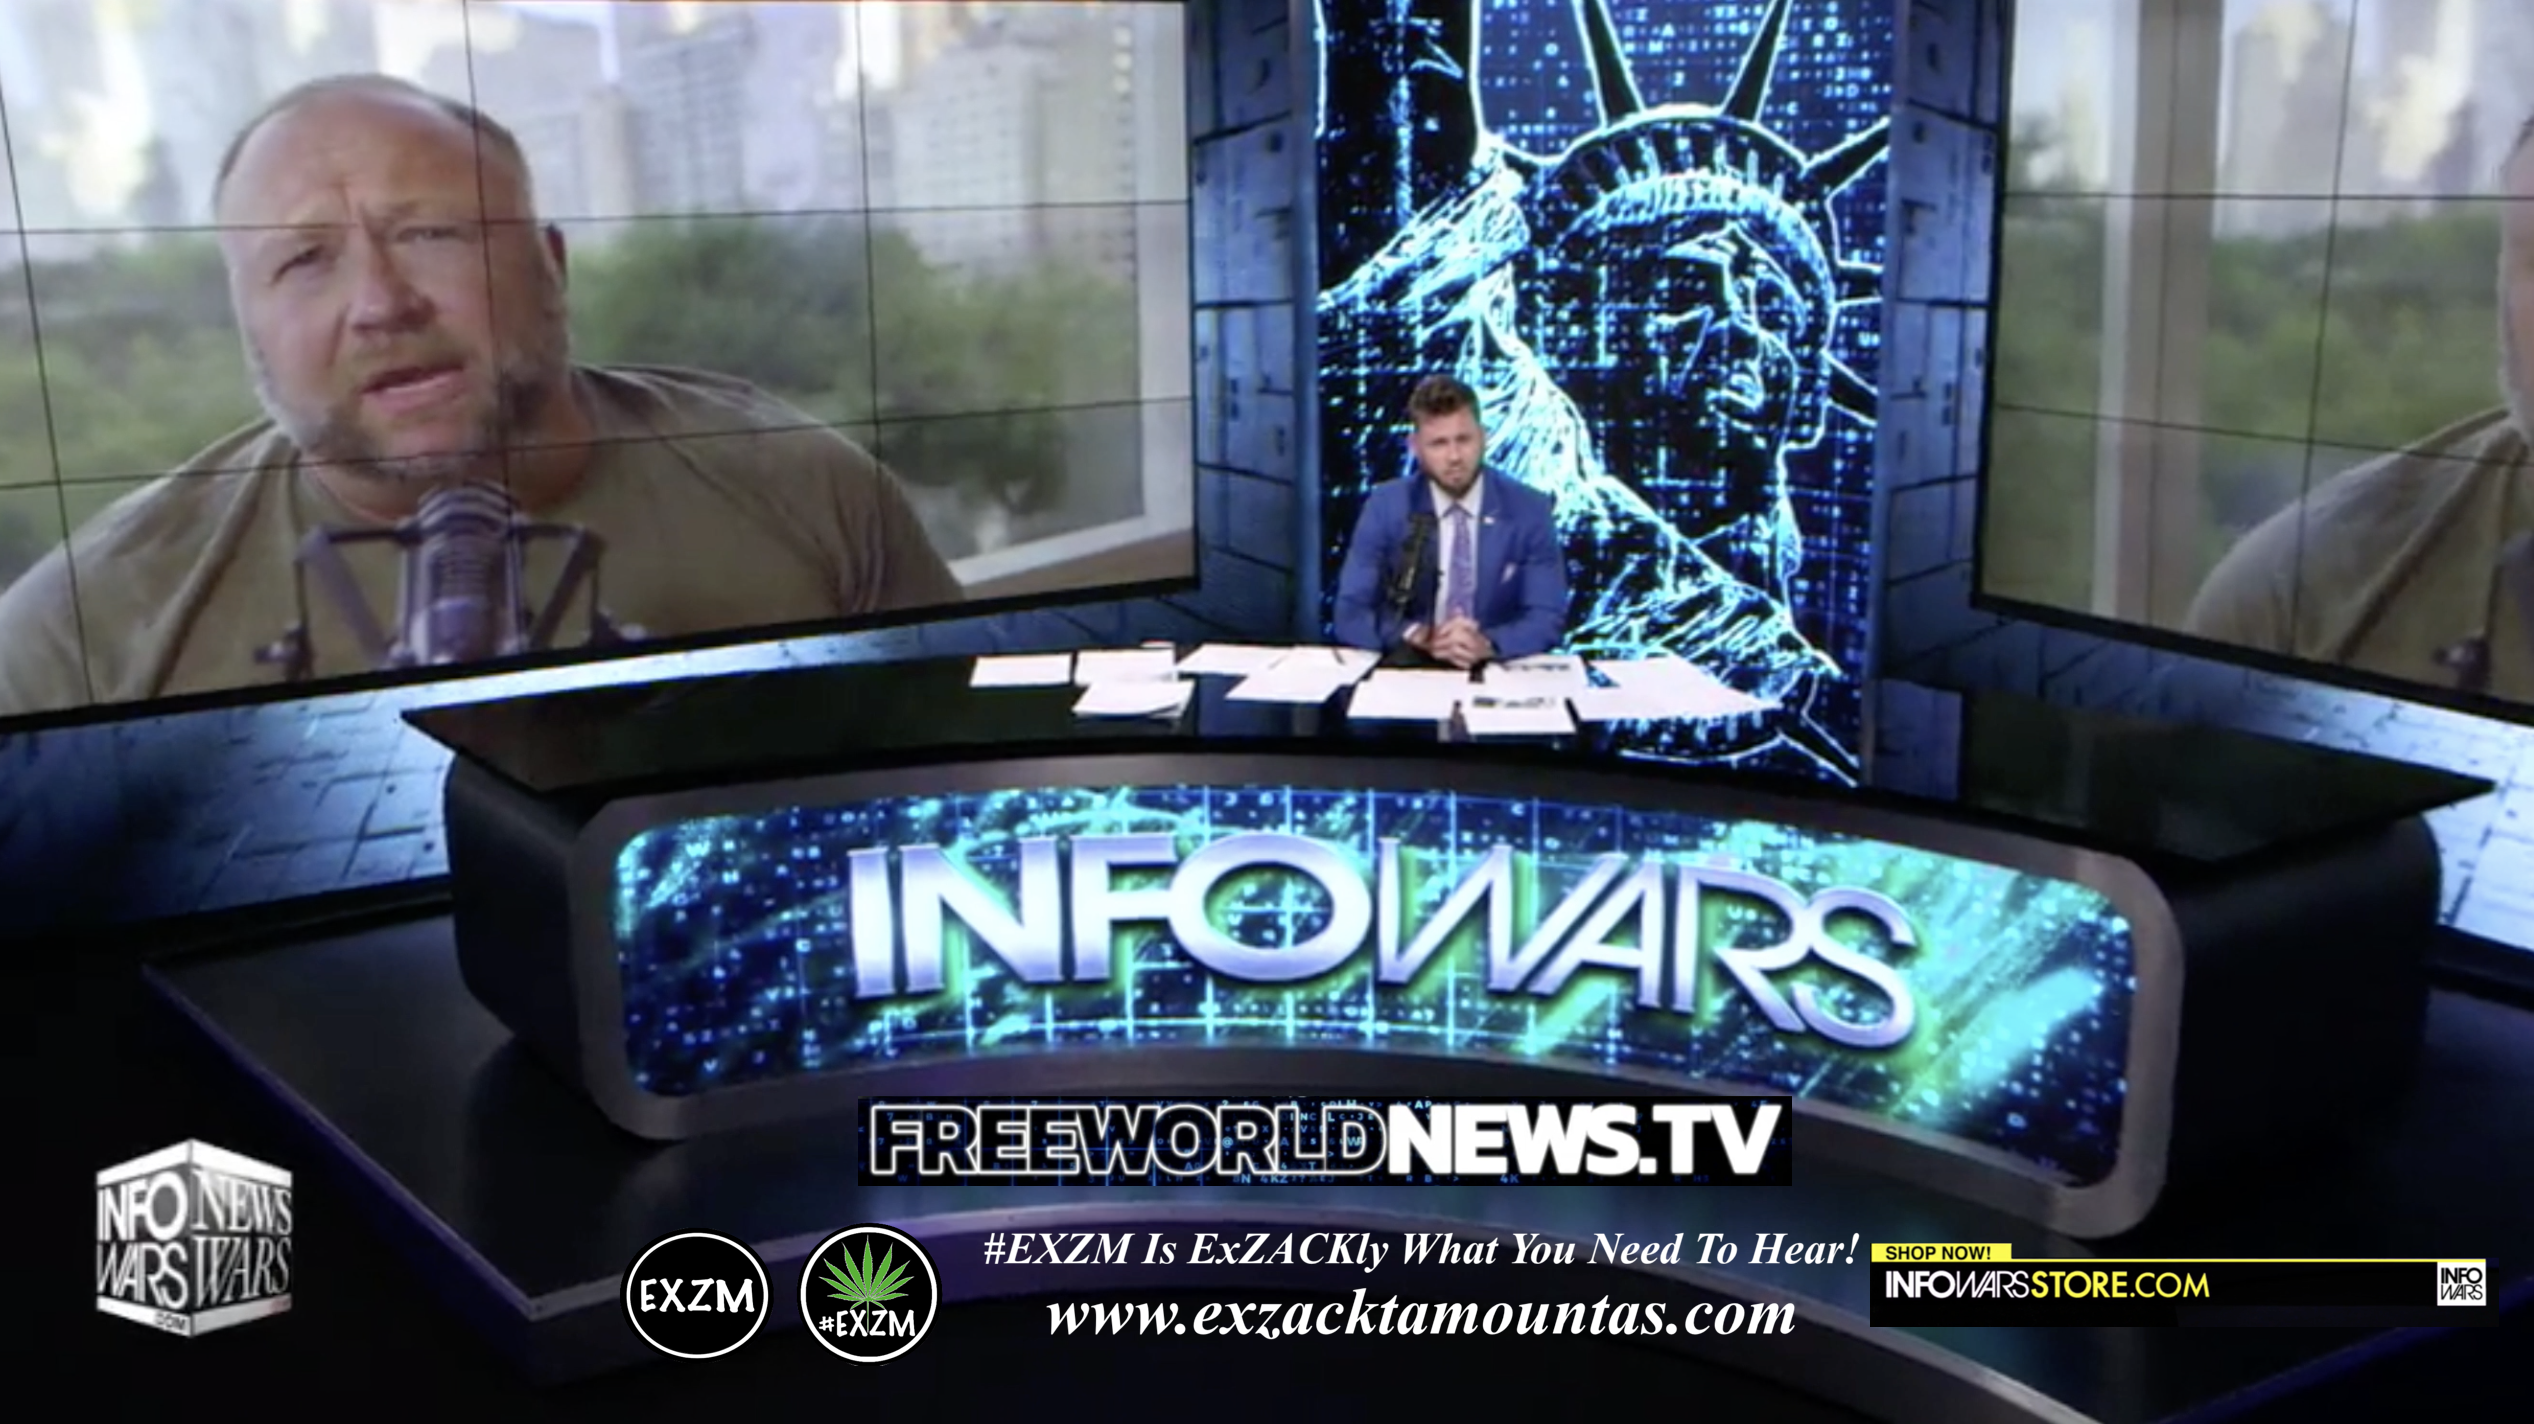 Alex Jones Owen Shroyer Live In Infowars Studio Free World News TV EXZM Zack Mount June 20th 2021 copy